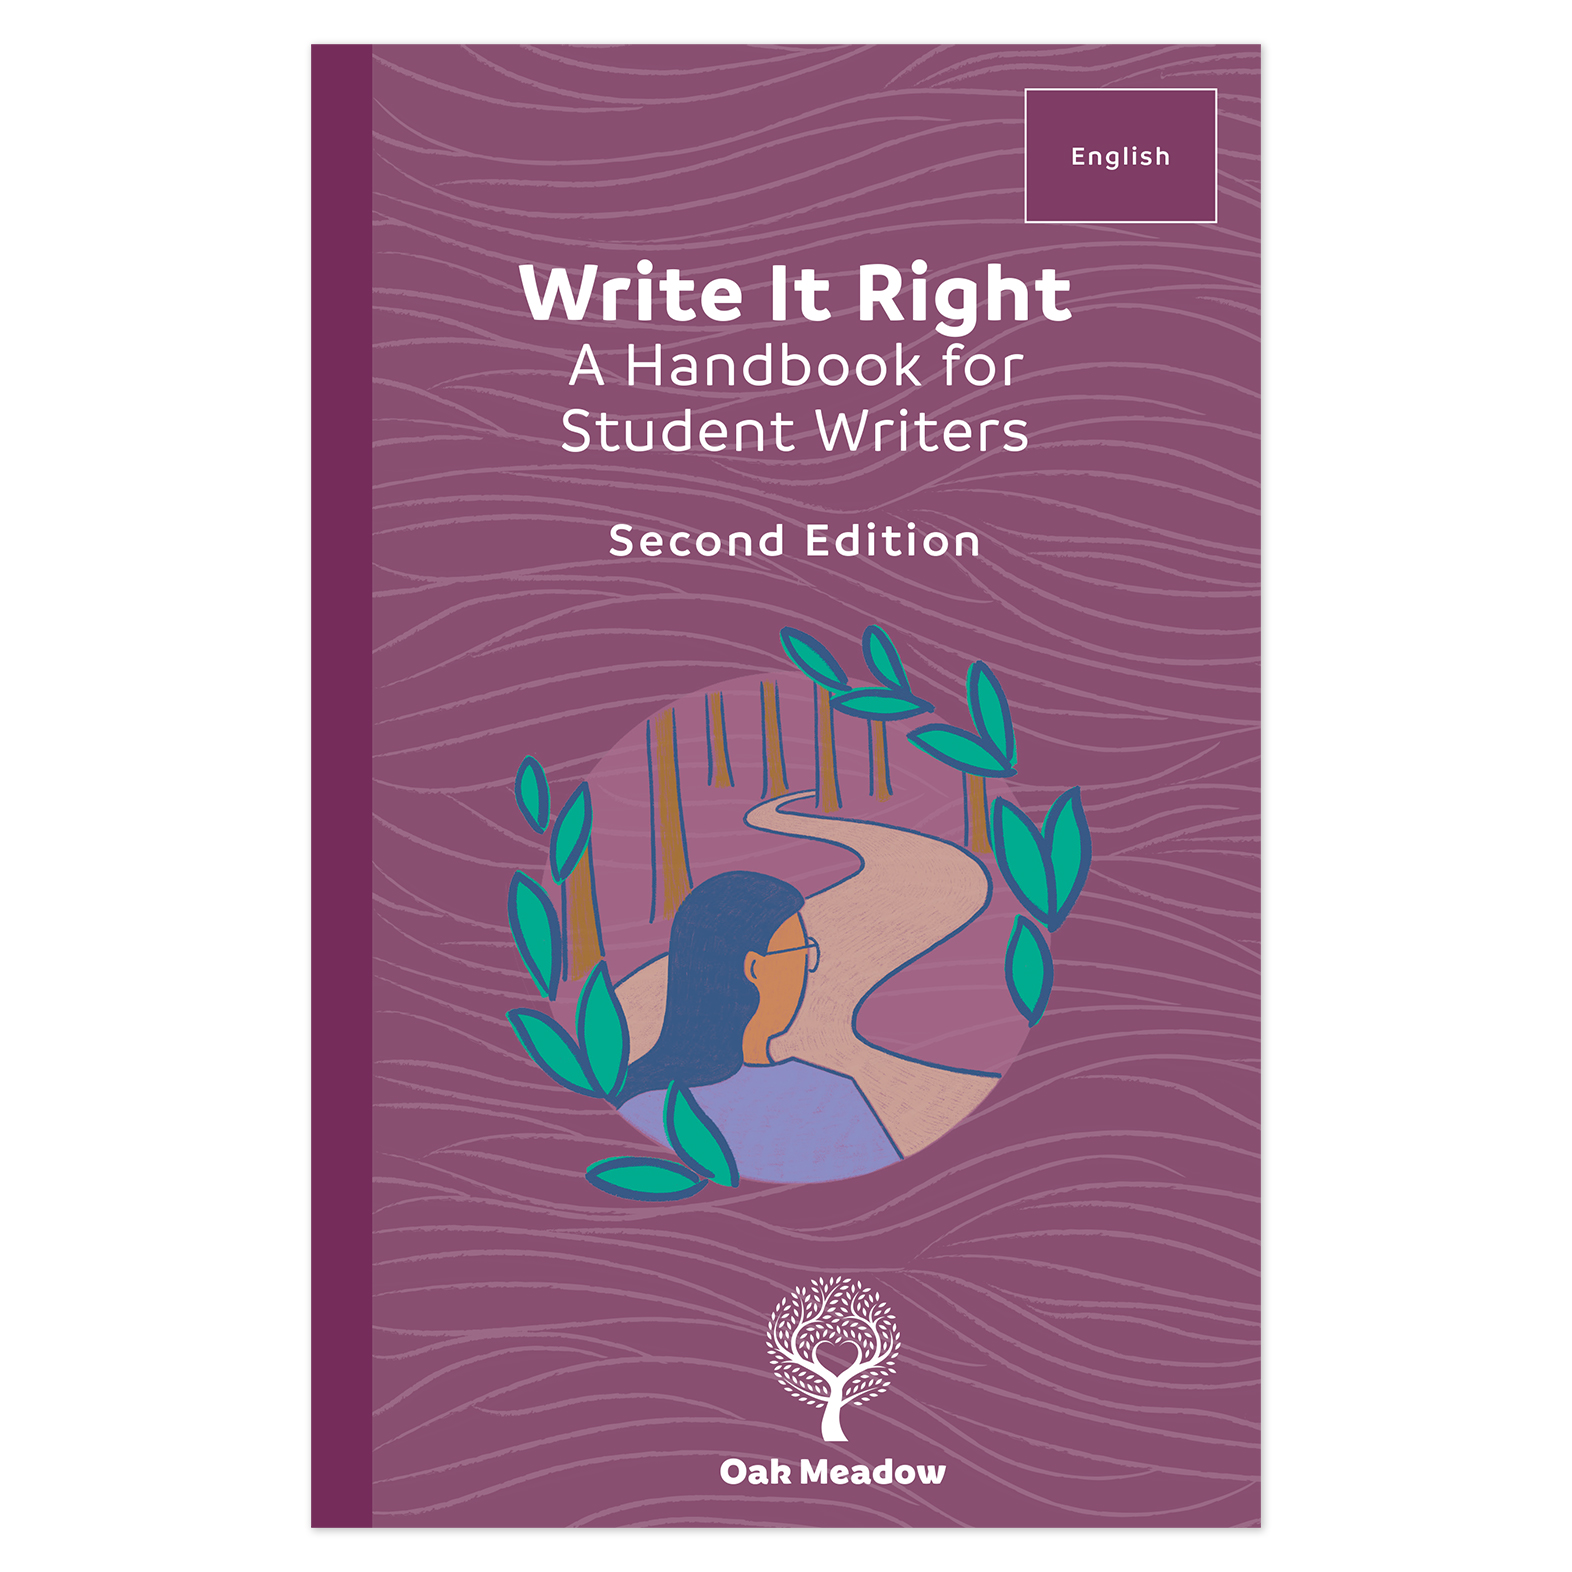 Write　for　A　It　Oak　Right:　Writers　Student　Handbook　Meadow